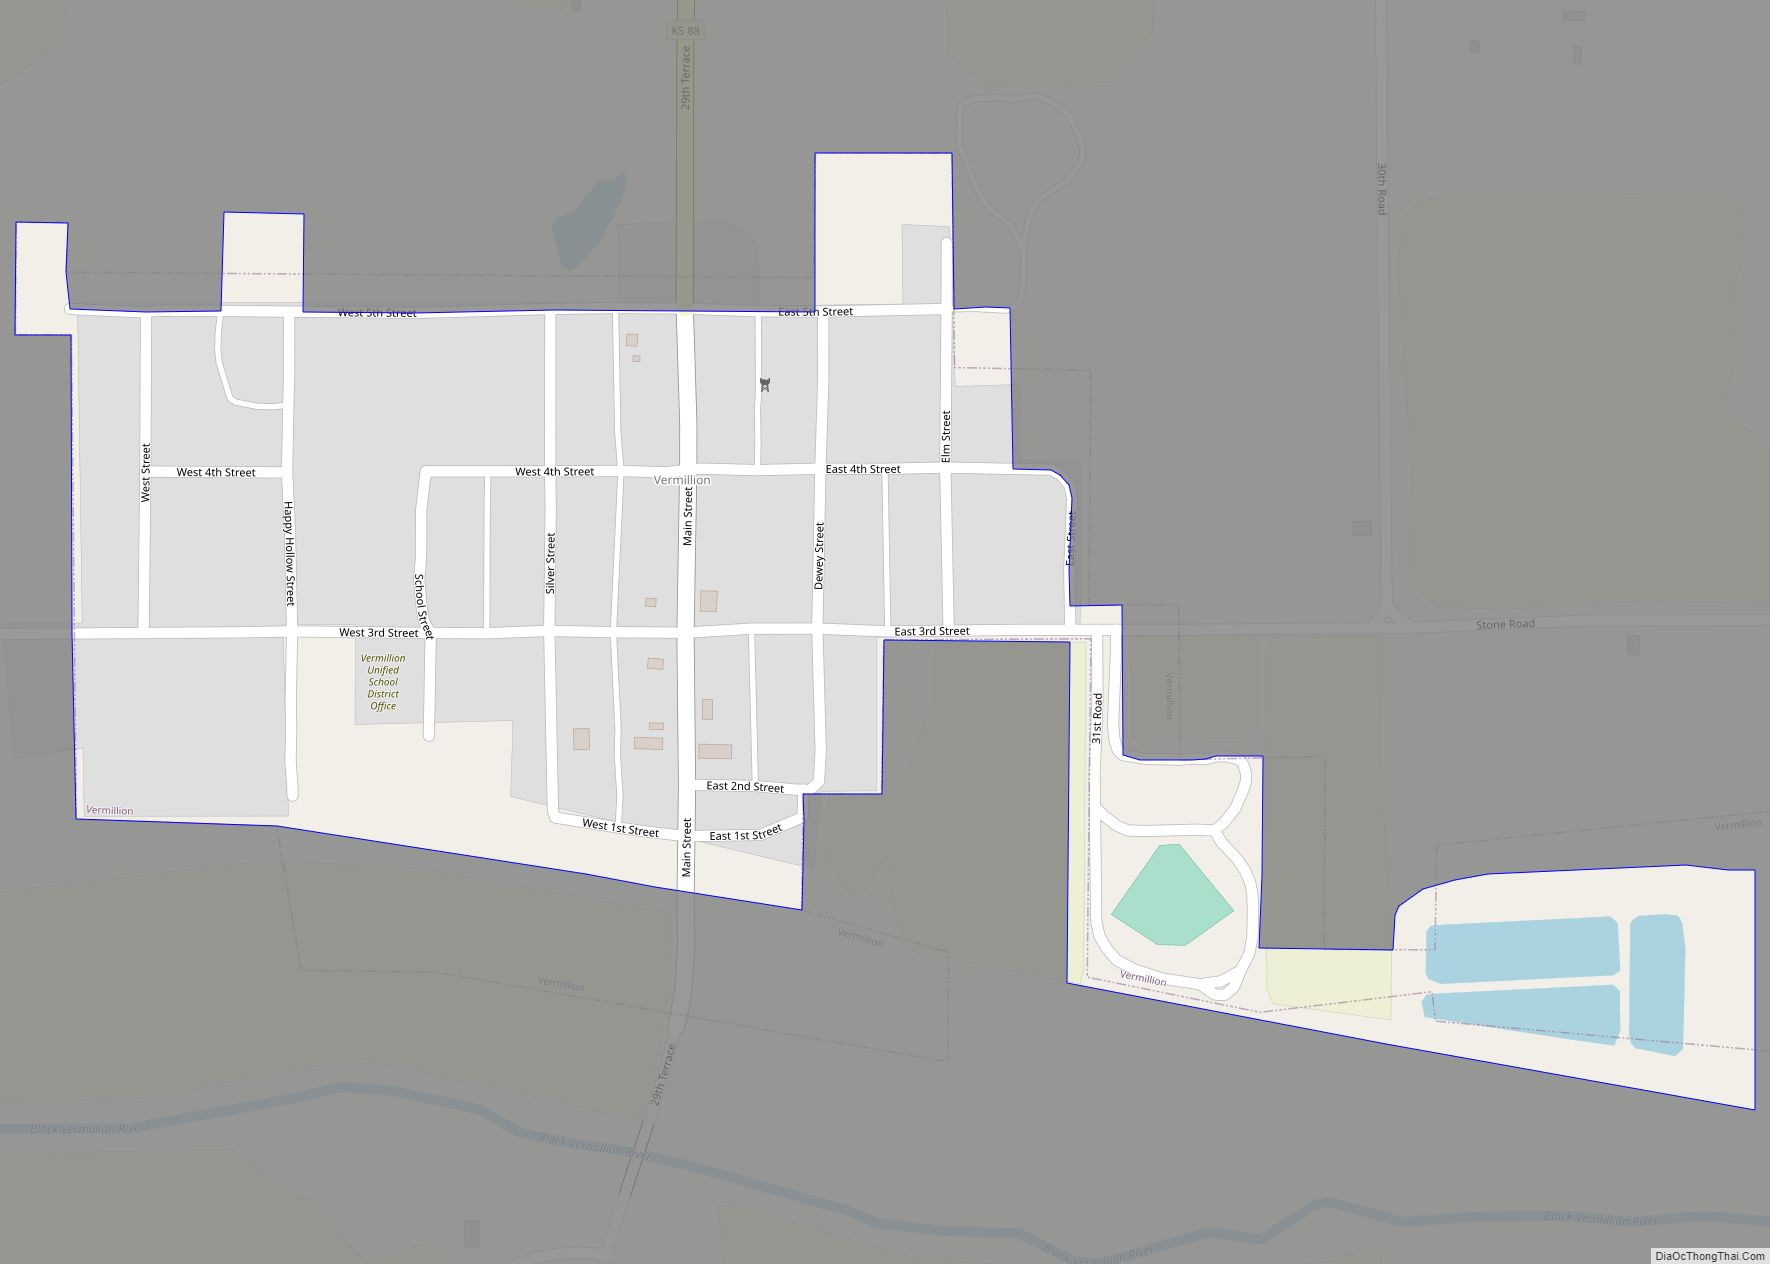 Map of Vermillion city